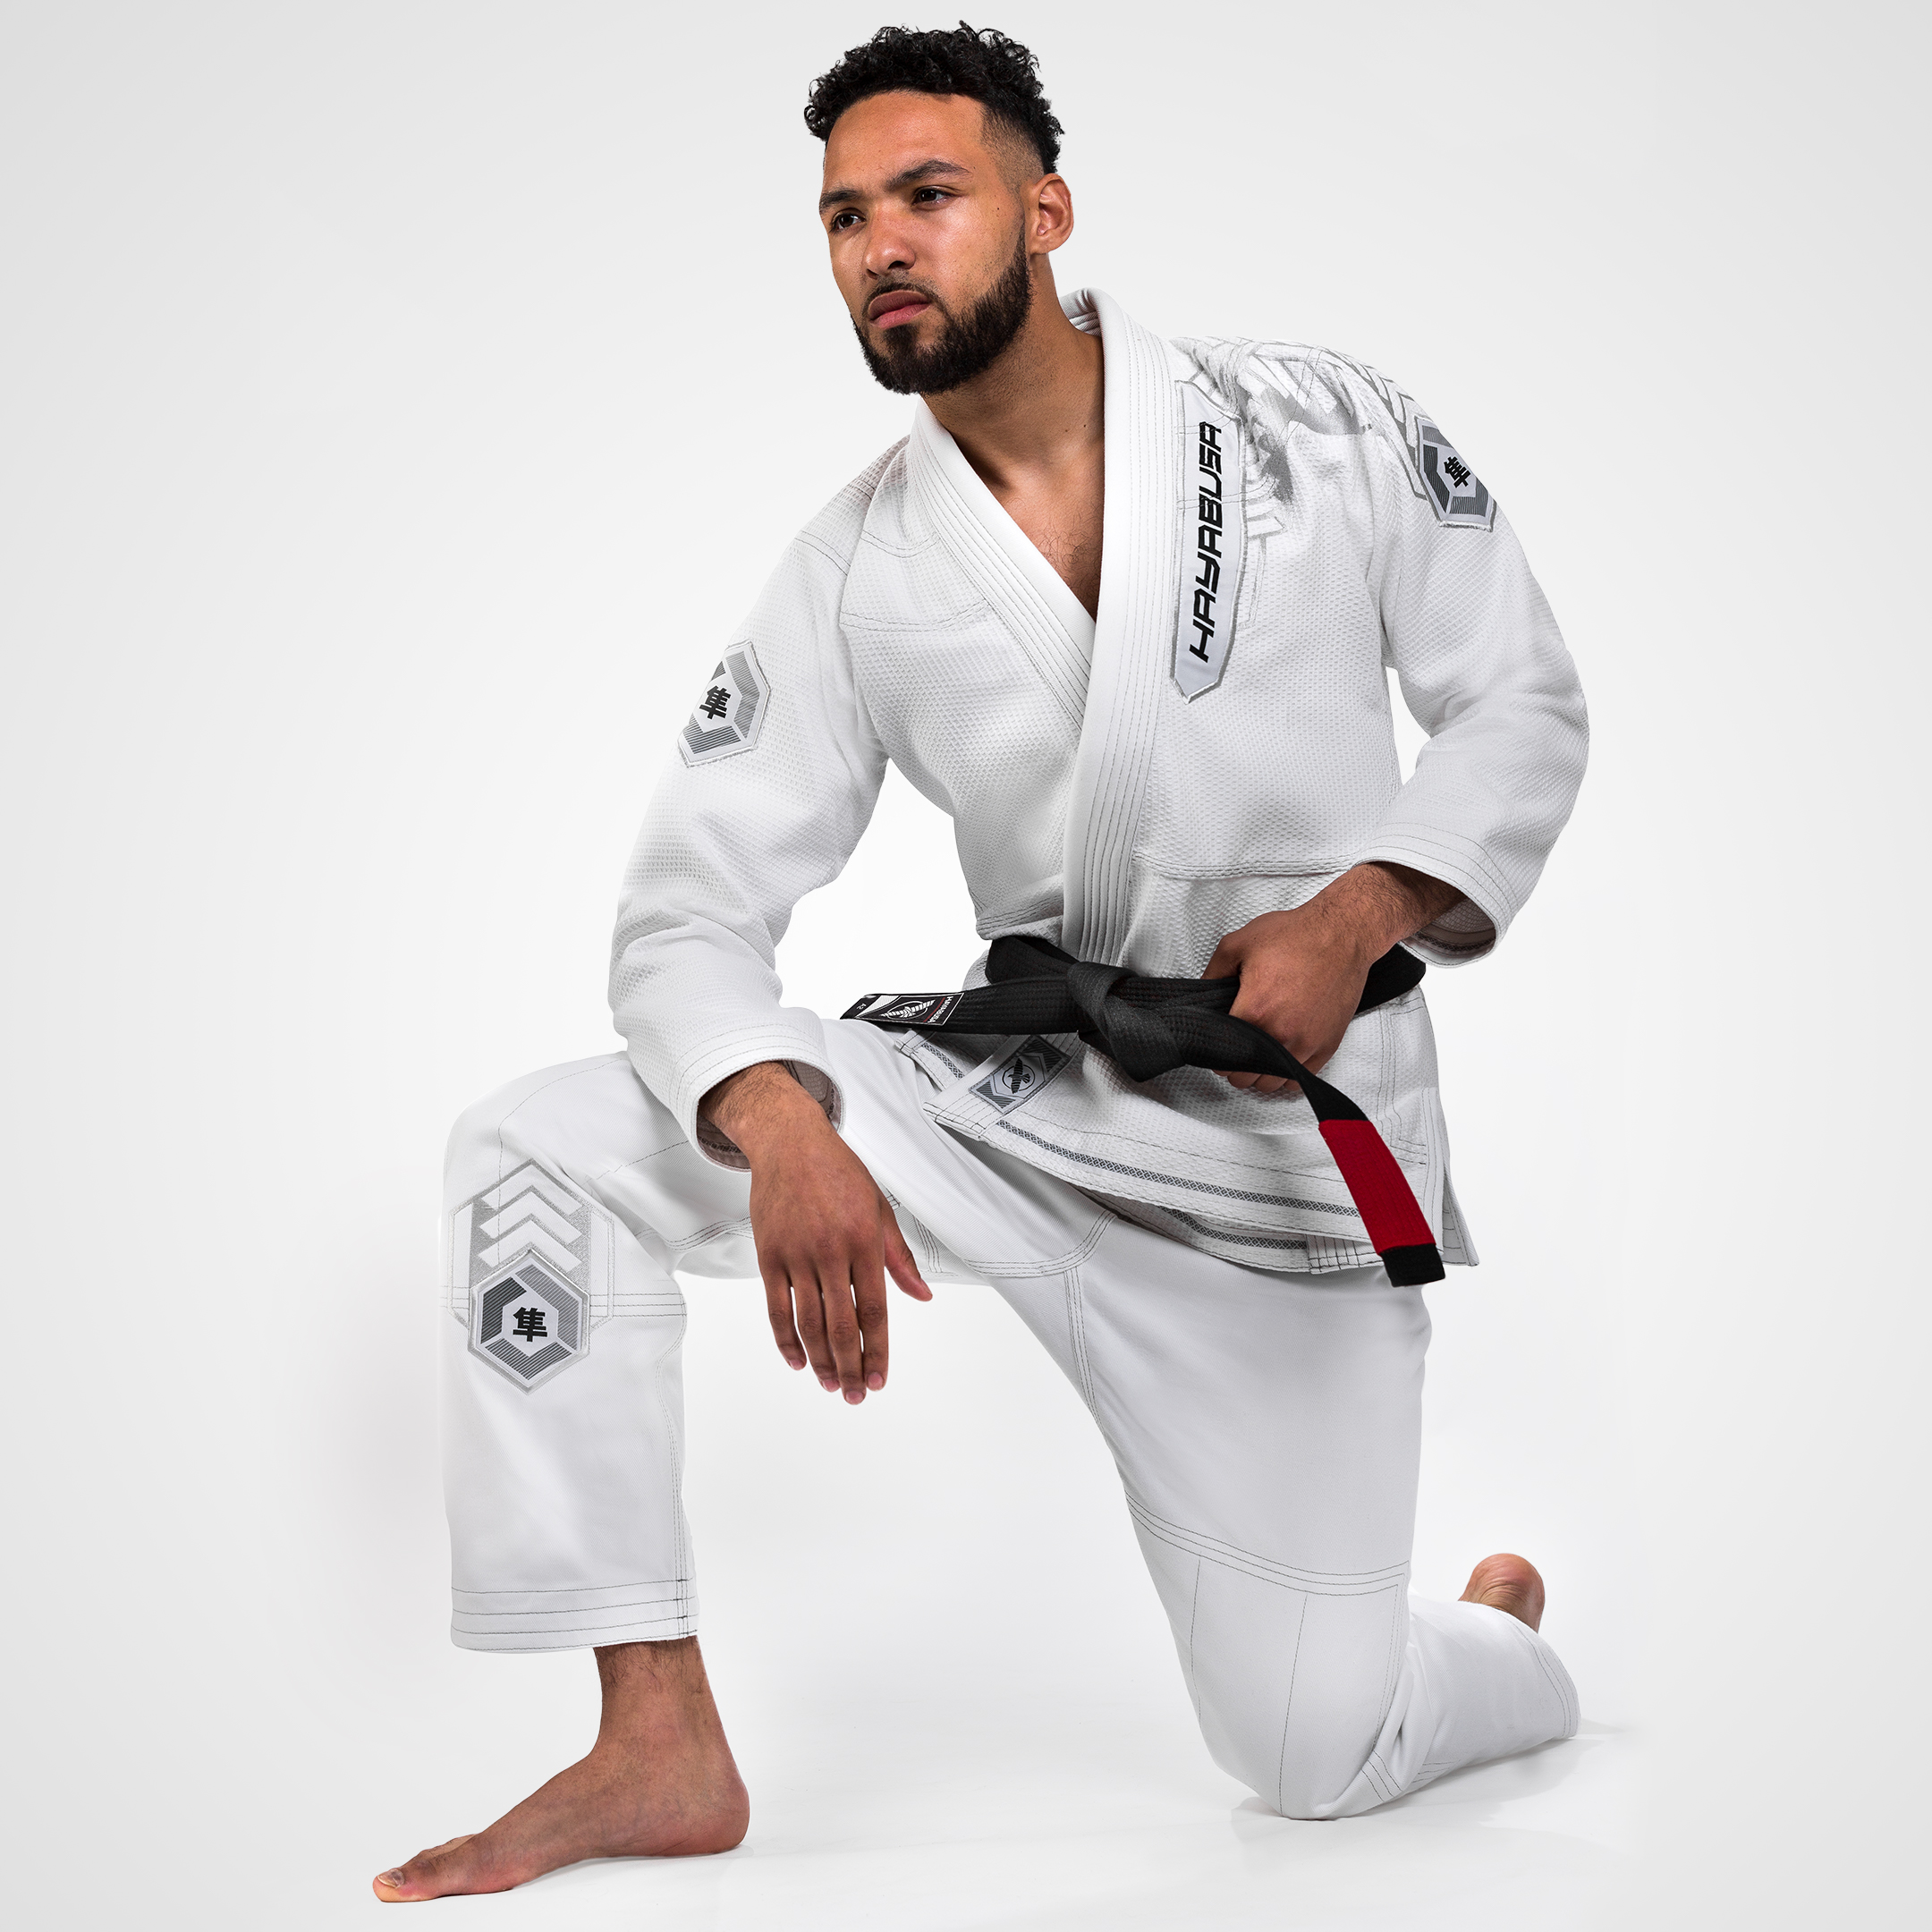 Jui Jitsu Gi Details about   HAYABUSA Combat Shorts size 30 or 26 Judo/ Karate 